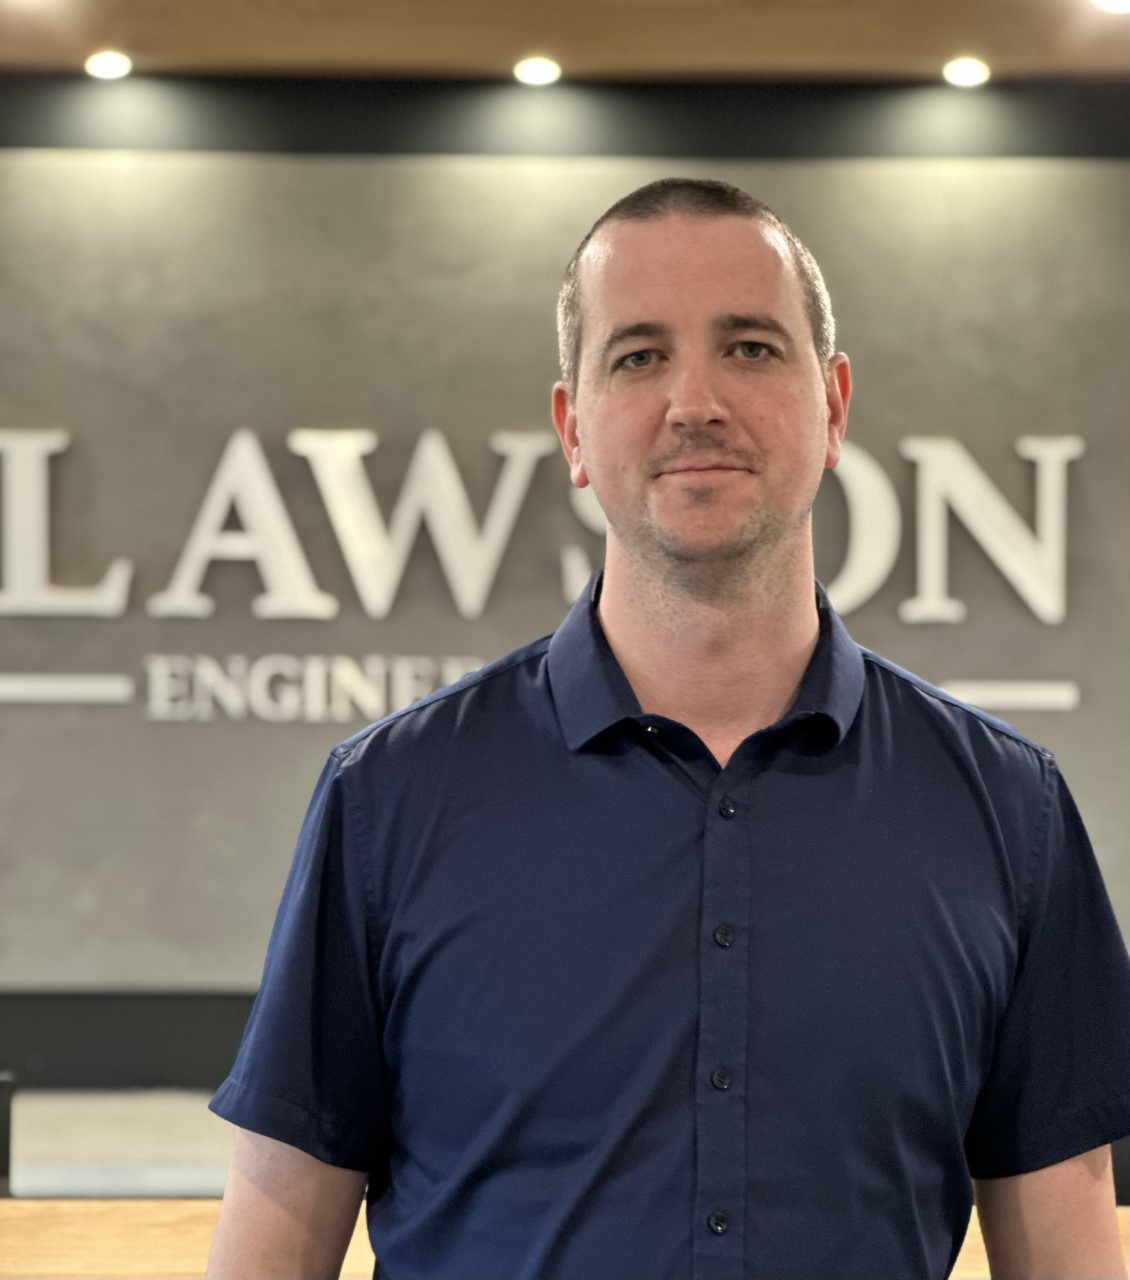 David Pilling, E.I.T. - Lawson Engineering